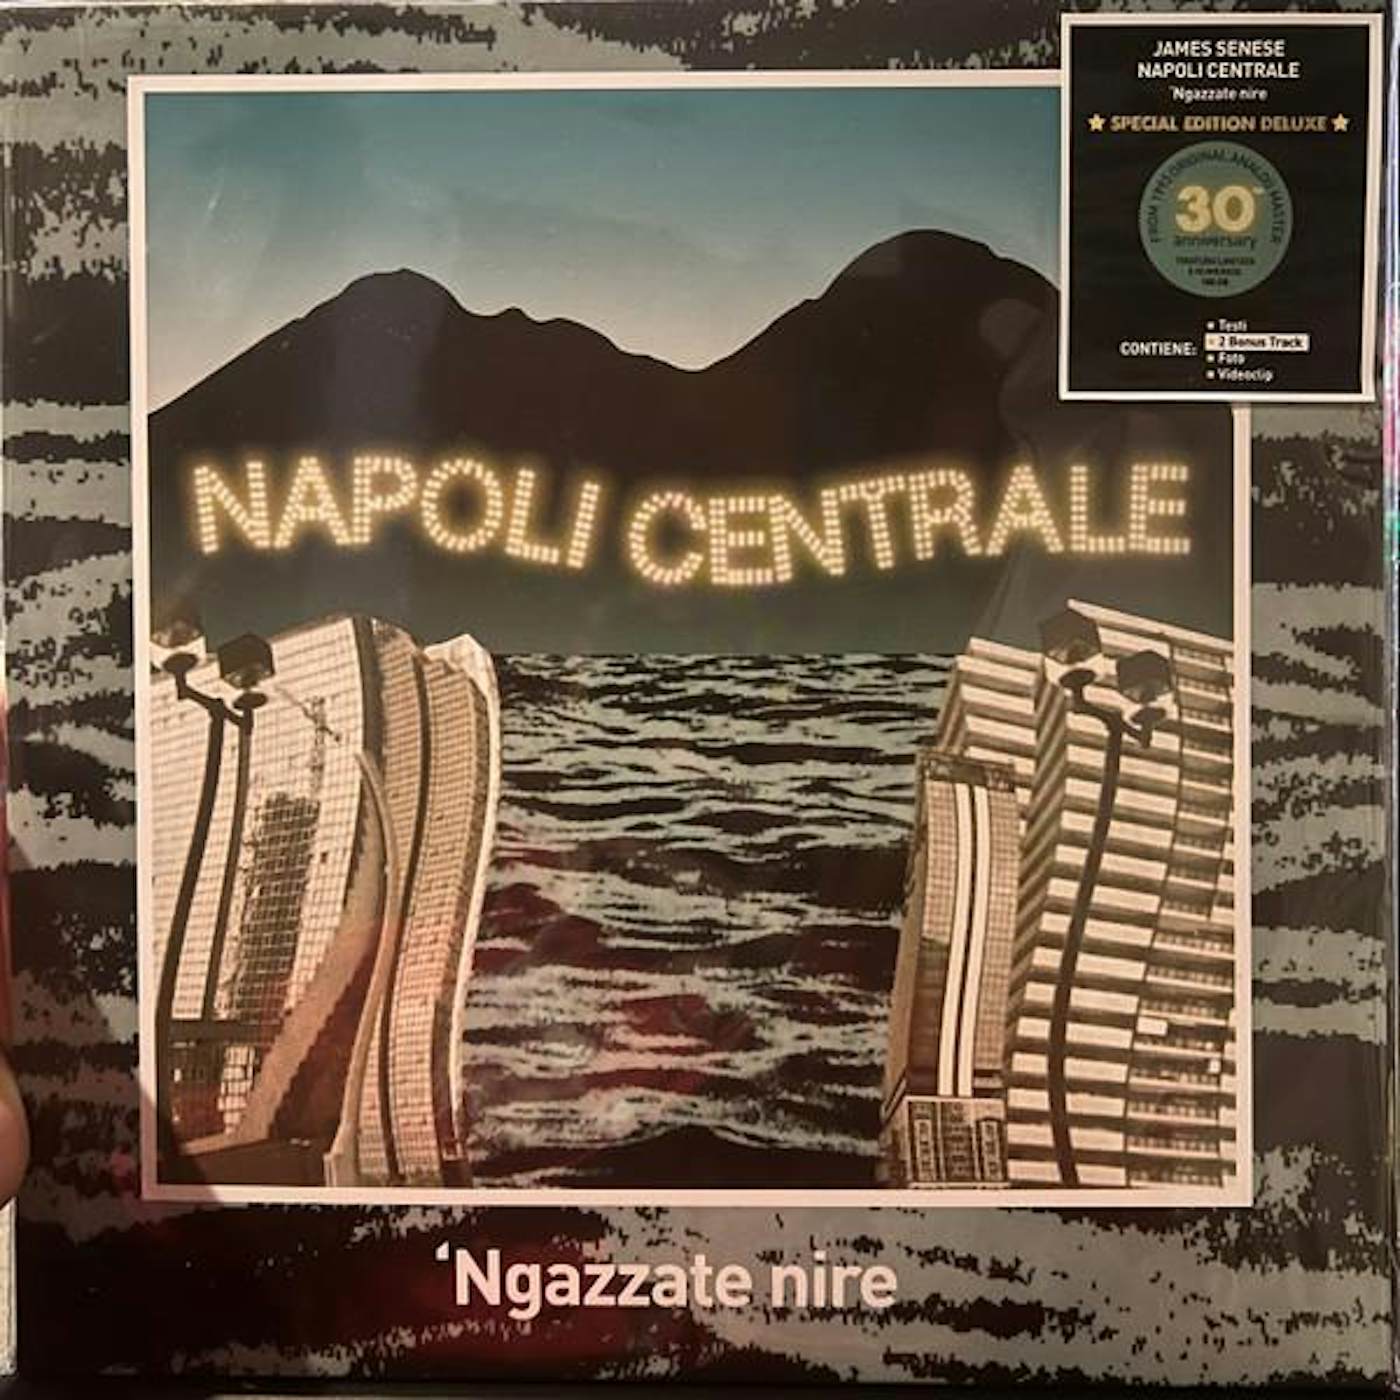 Napoli Centrale Ngazzate nire Vinyl Record